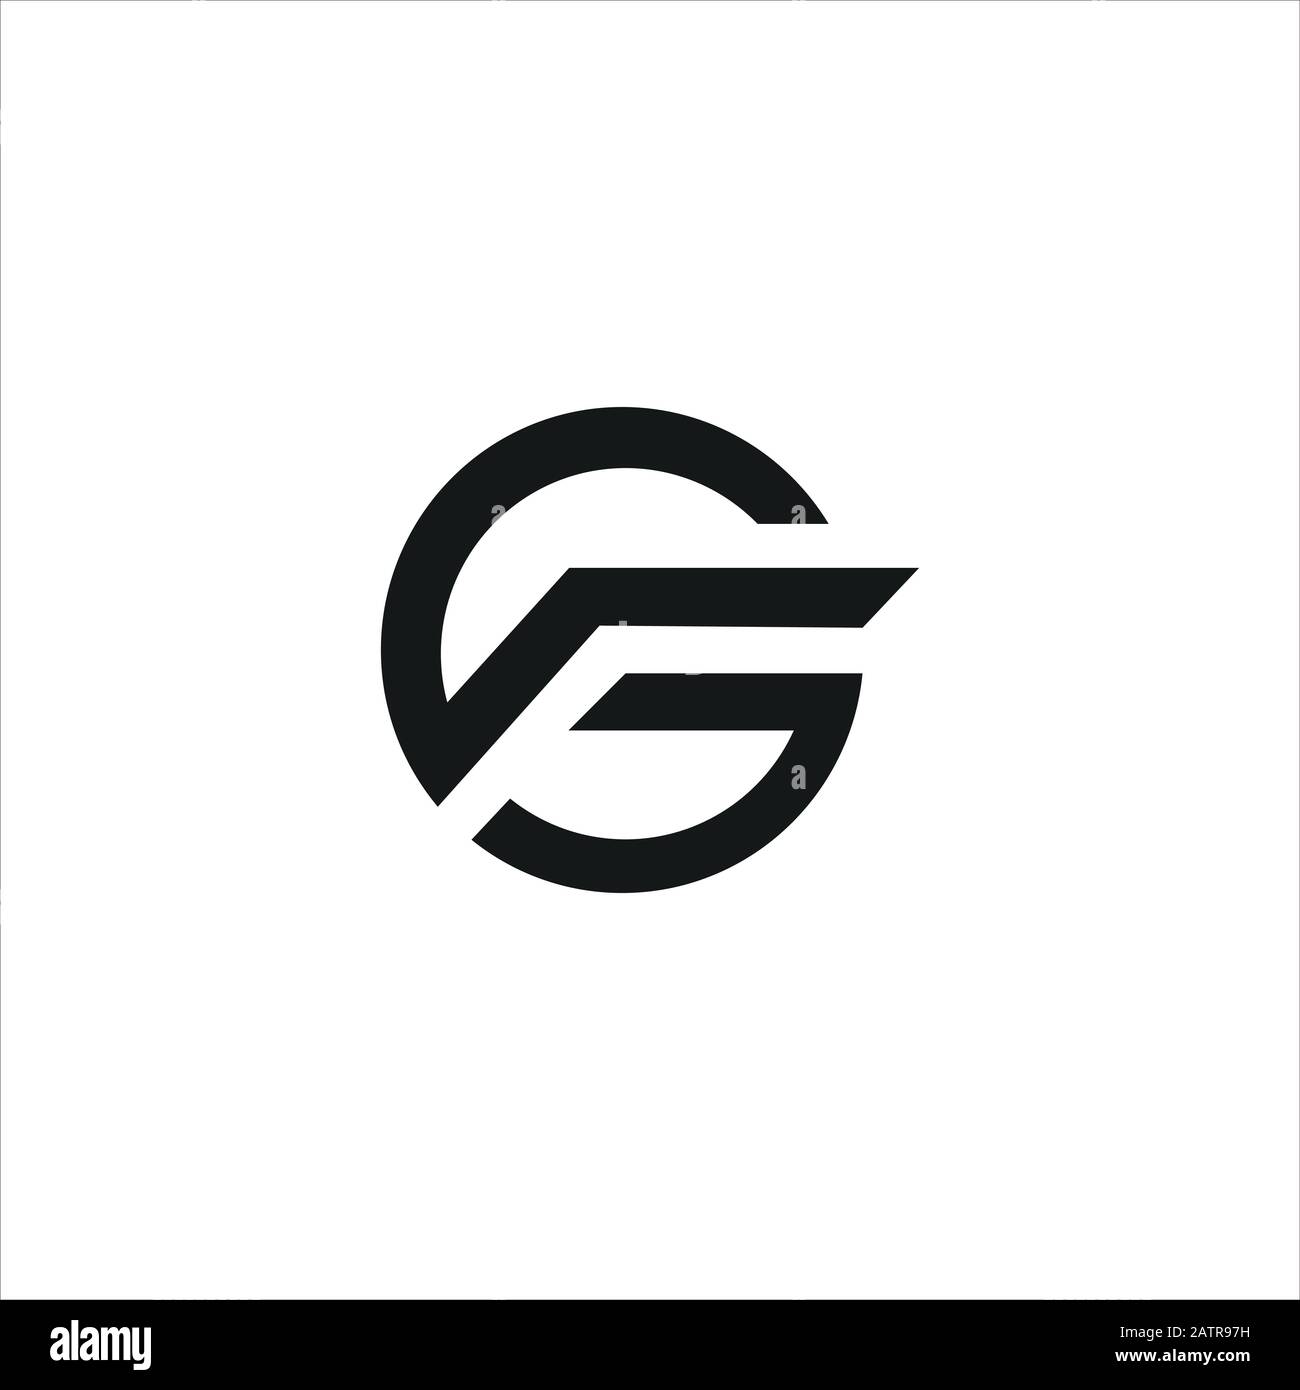 Gf Logo PNG Transparent Images Free Download | Vector Files | Pngtree